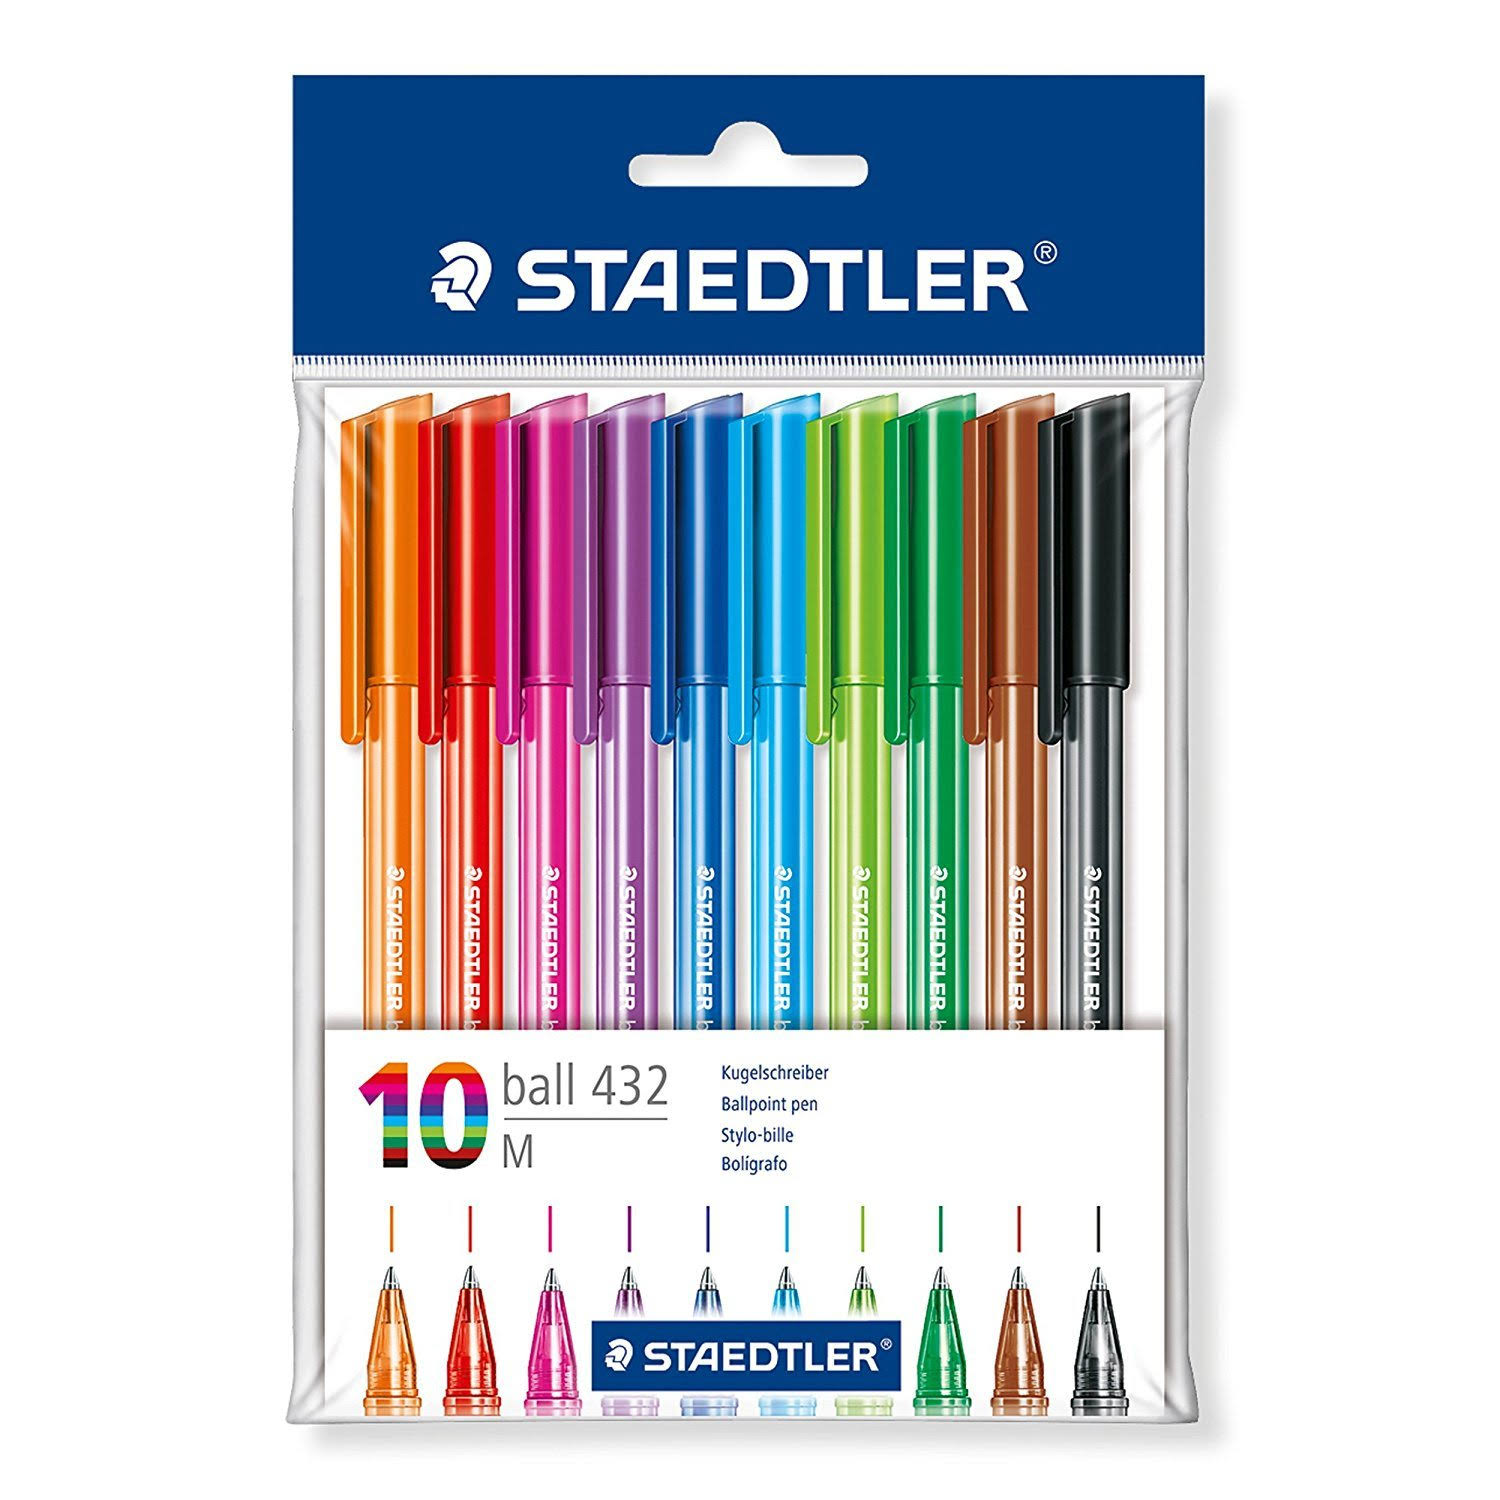 Staedtler Ballpoint Stick Pens - 432M, 10ct